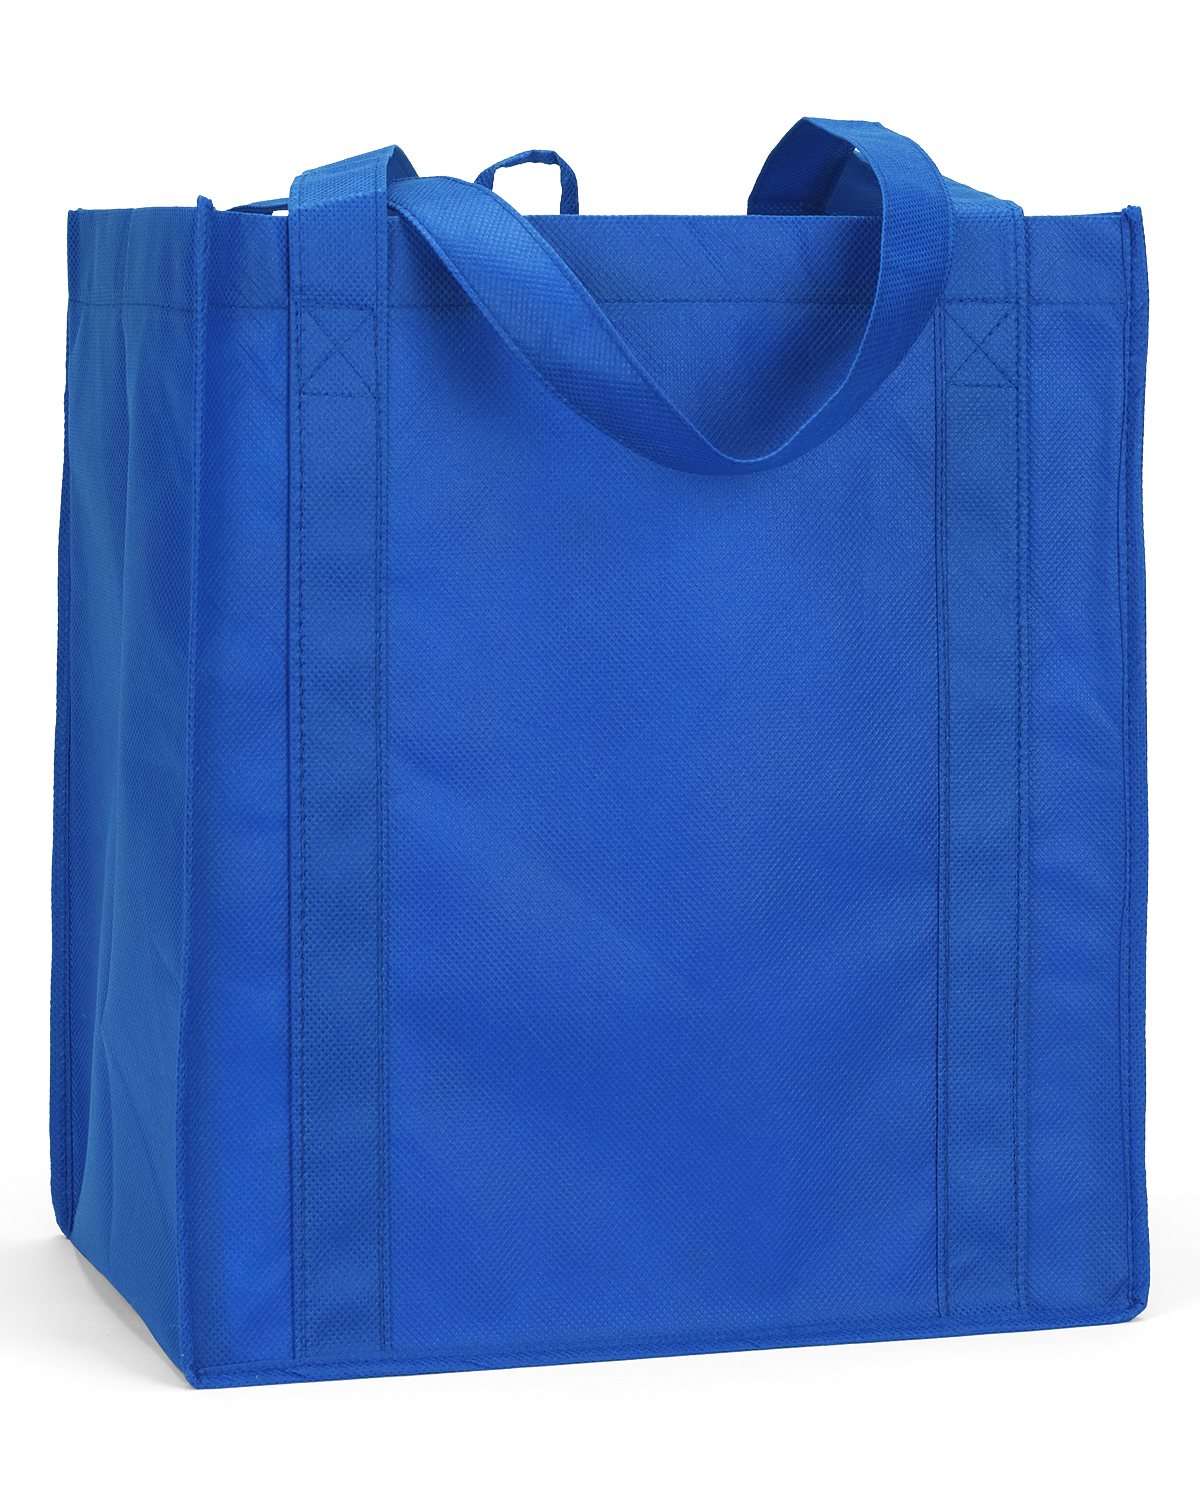 LB3000 Liberty Bags Reusable Shopping Bag